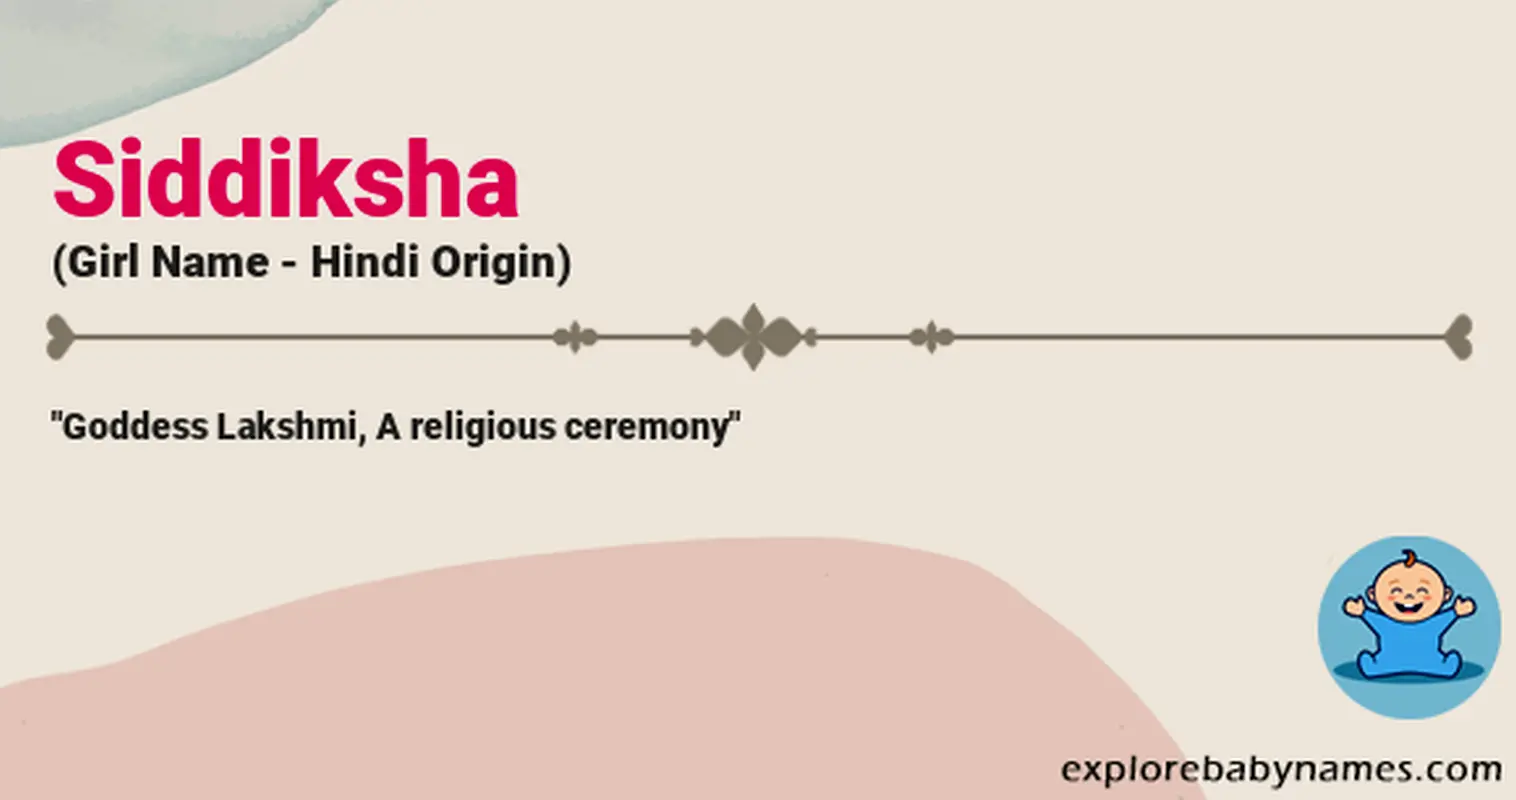 Meaning of Siddiksha